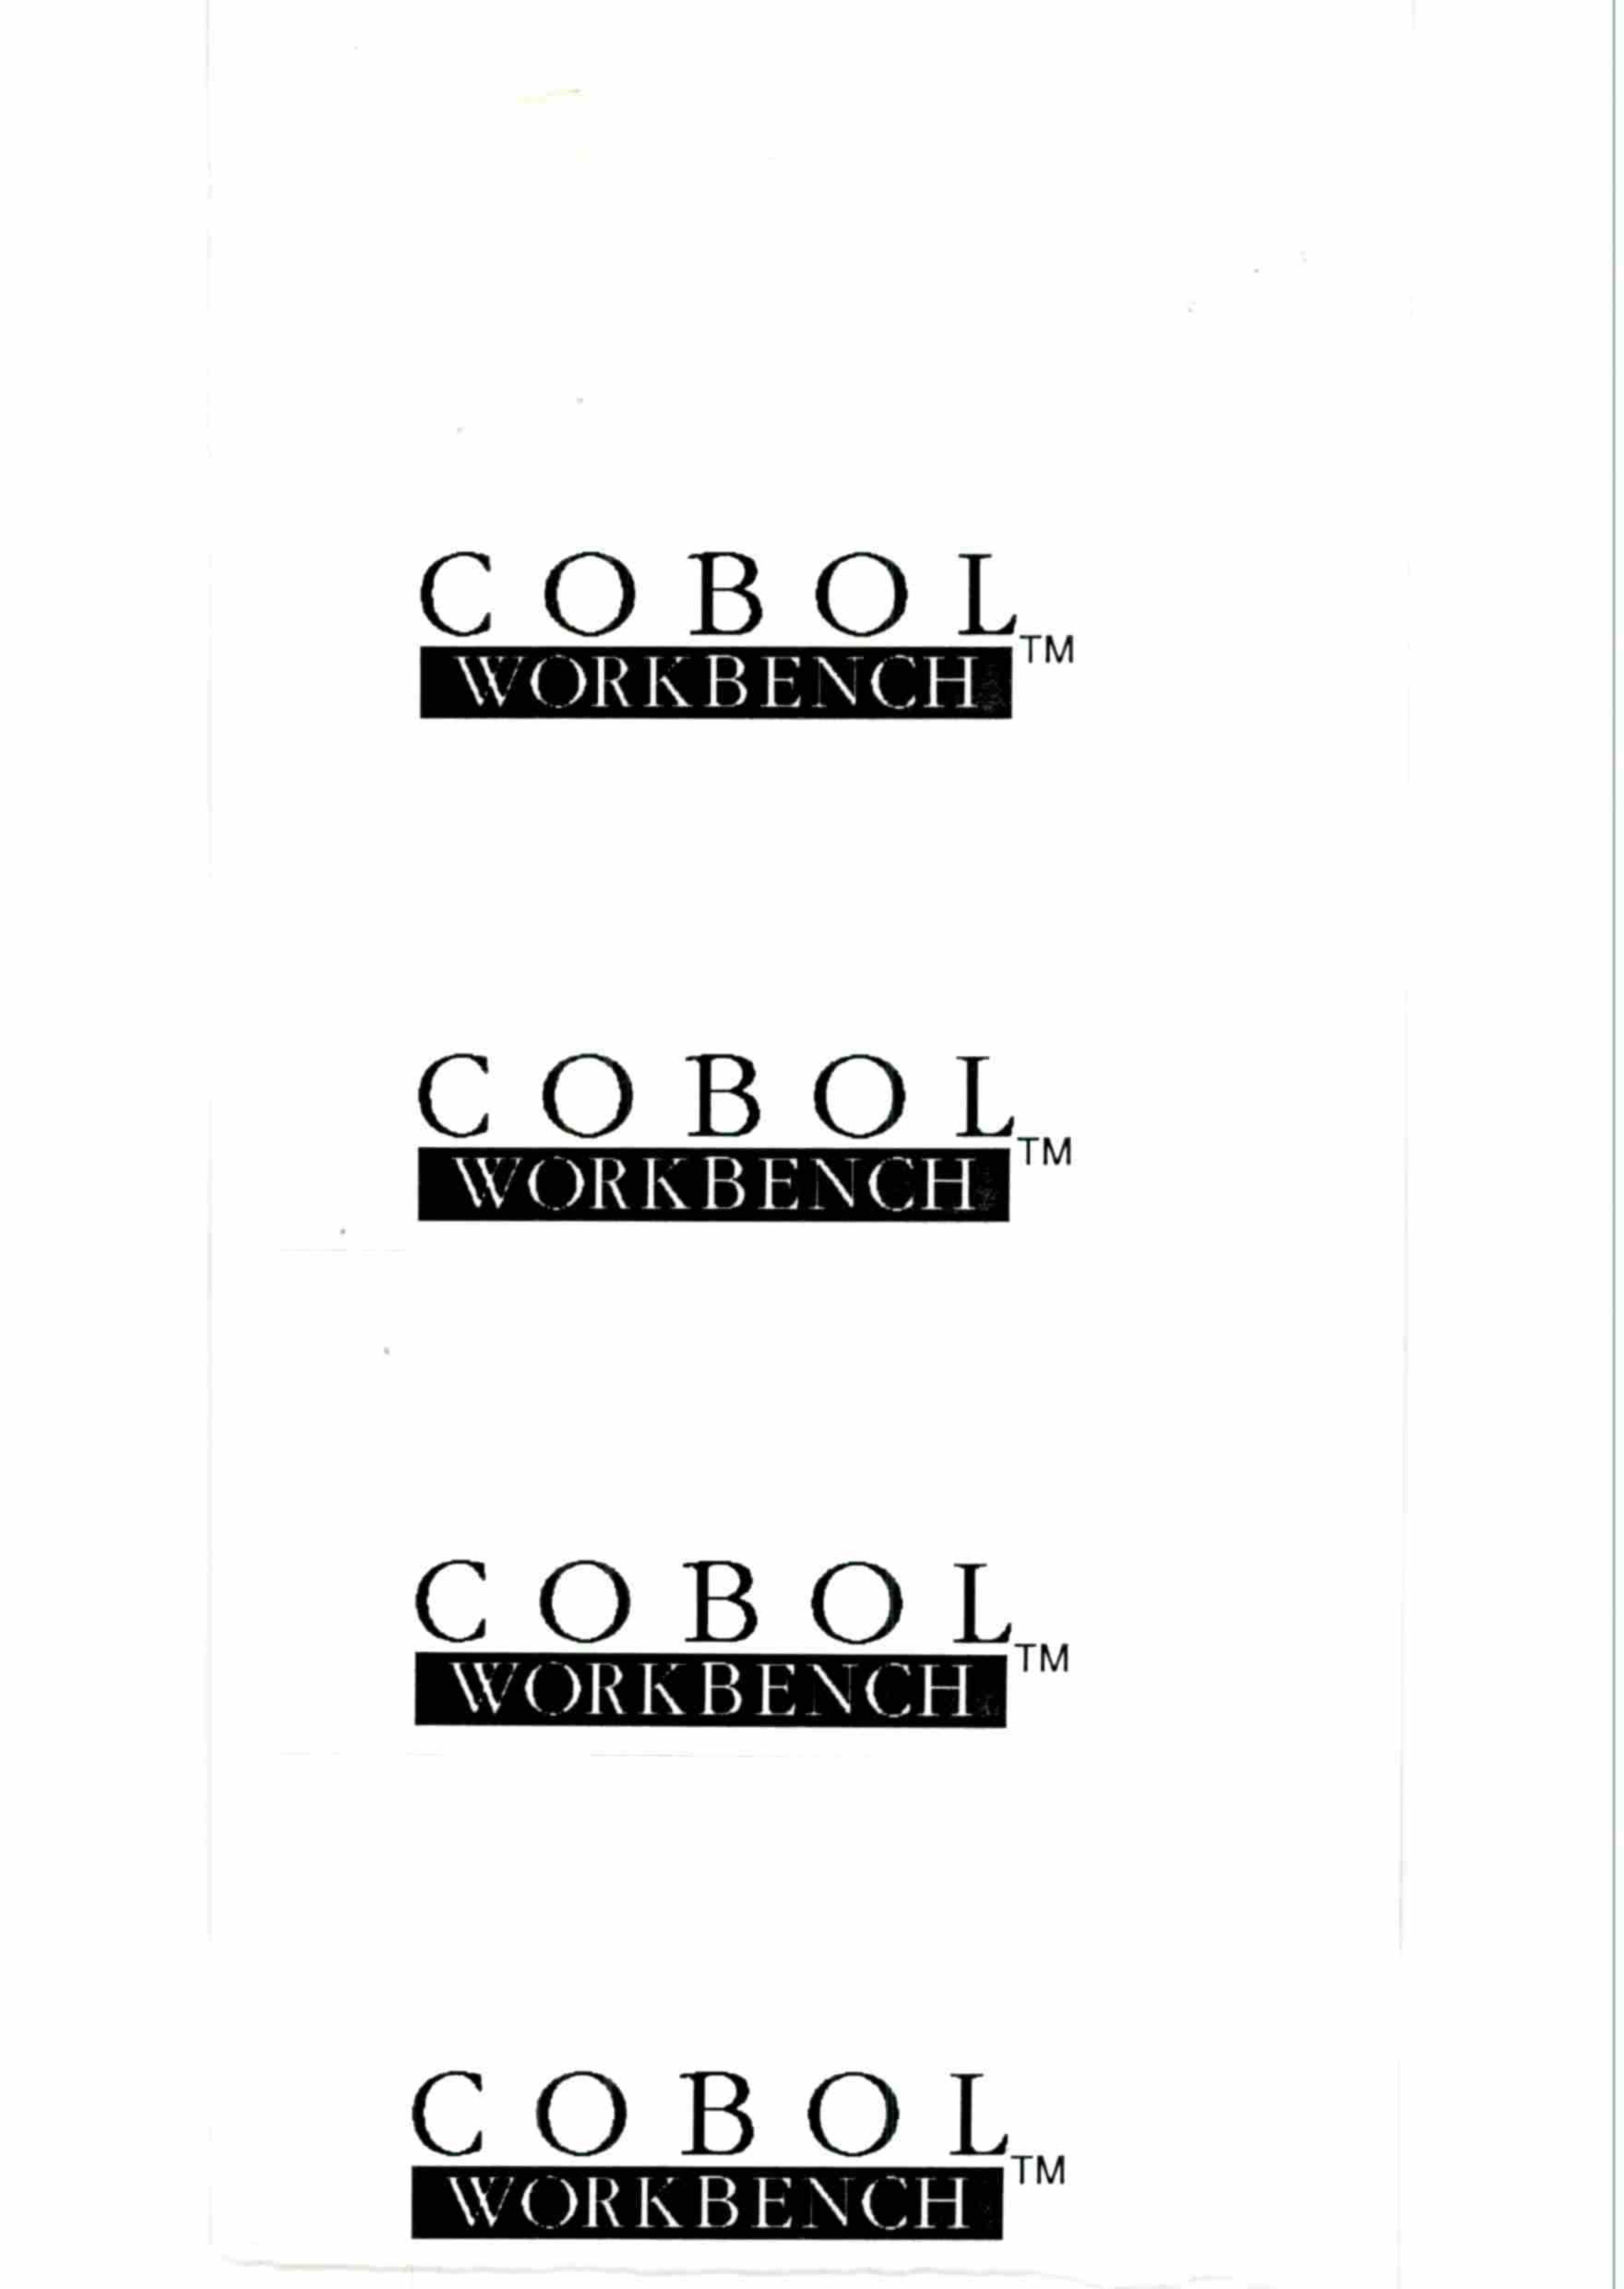  COBOL WORKBENCH